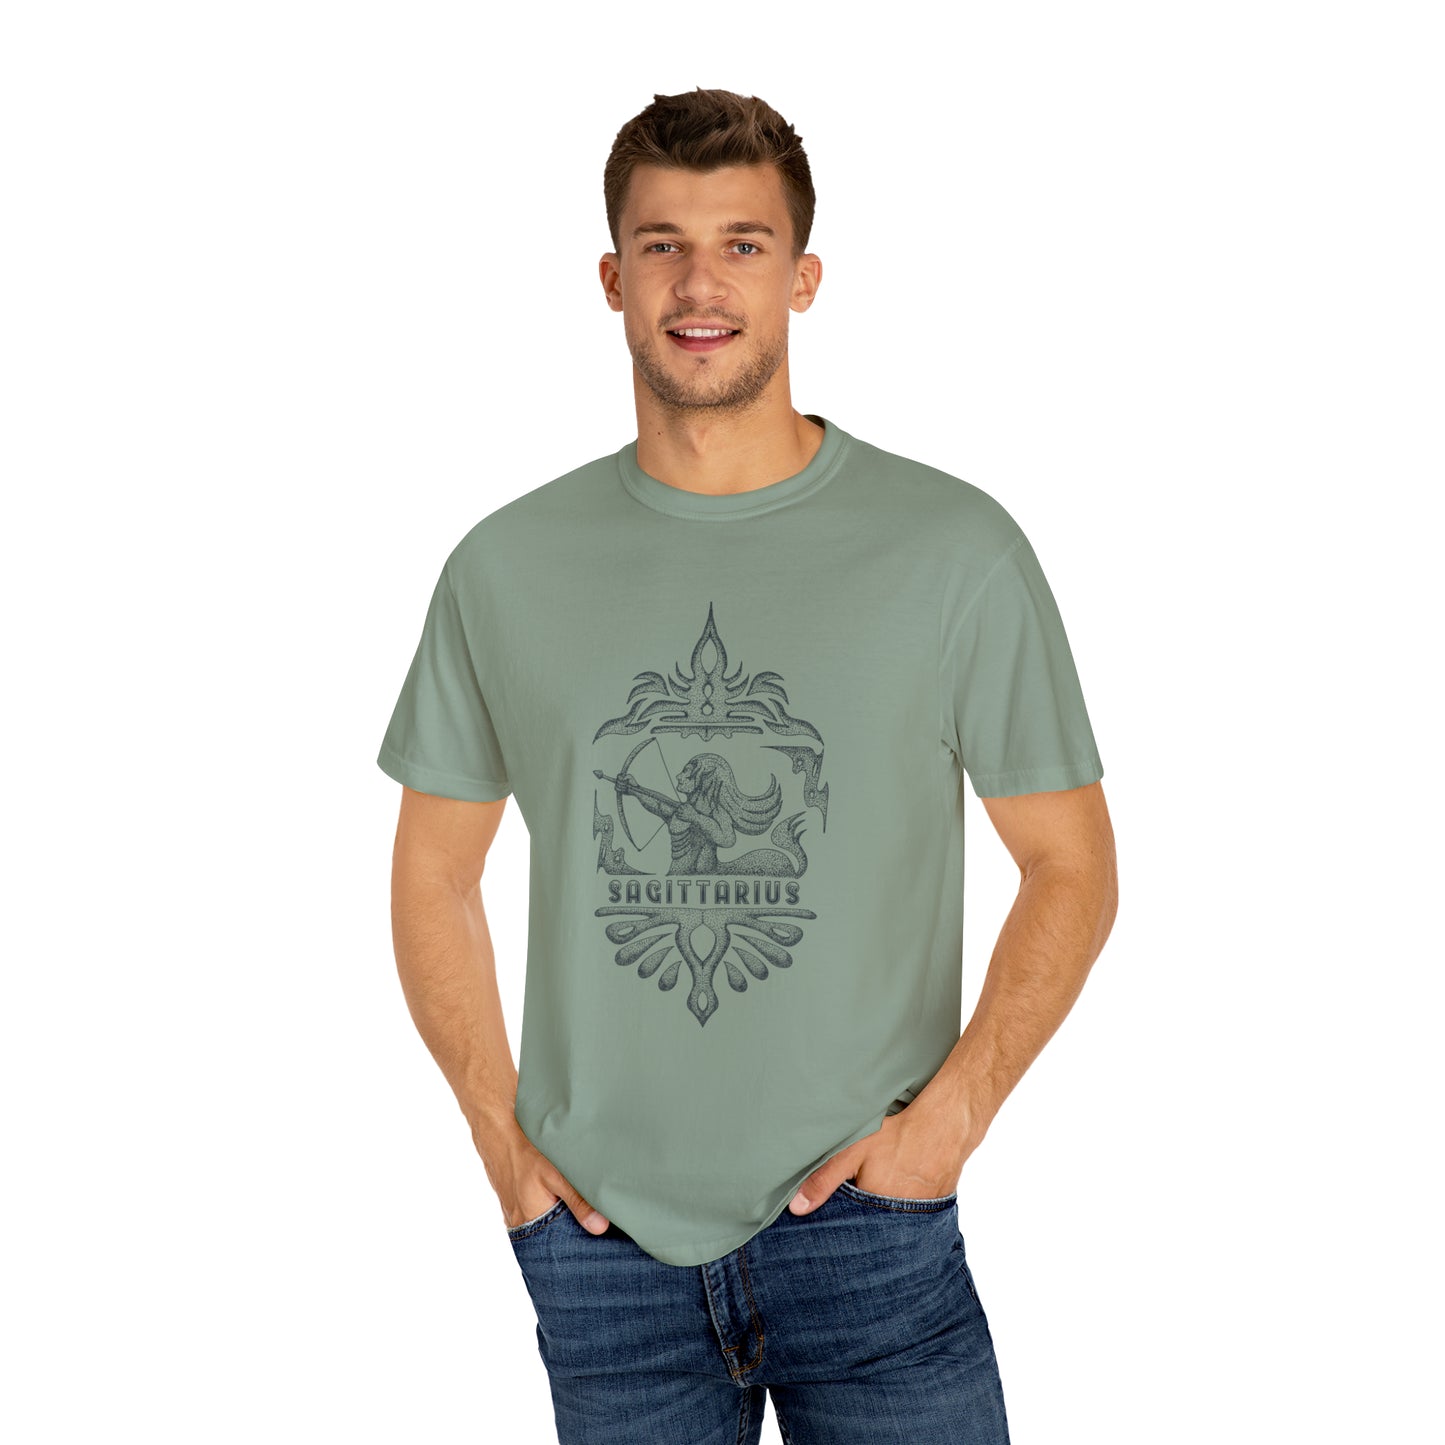 Comfort Colors Sagittarius Vintage Shirt, Zodiac Astrology T-shirt, Sagittarius Shirt Unisex